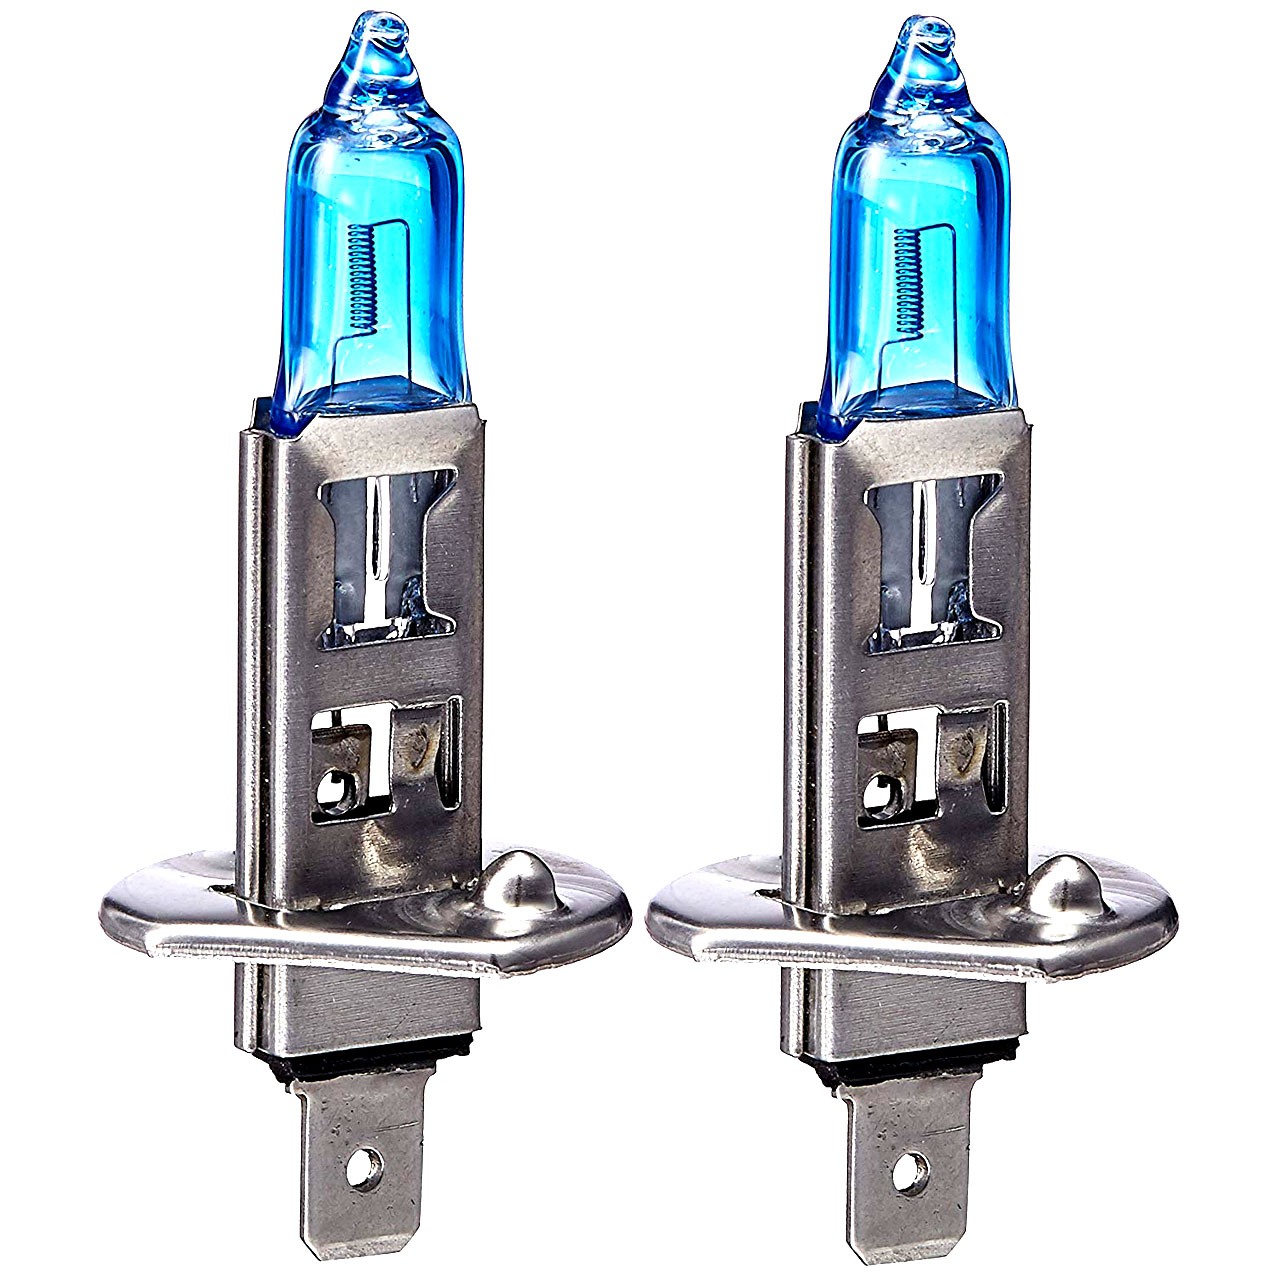 لامپ خودرو فونیکس مدل ultra blue H1 بسته دو عددی همراه دستکش Nitrile